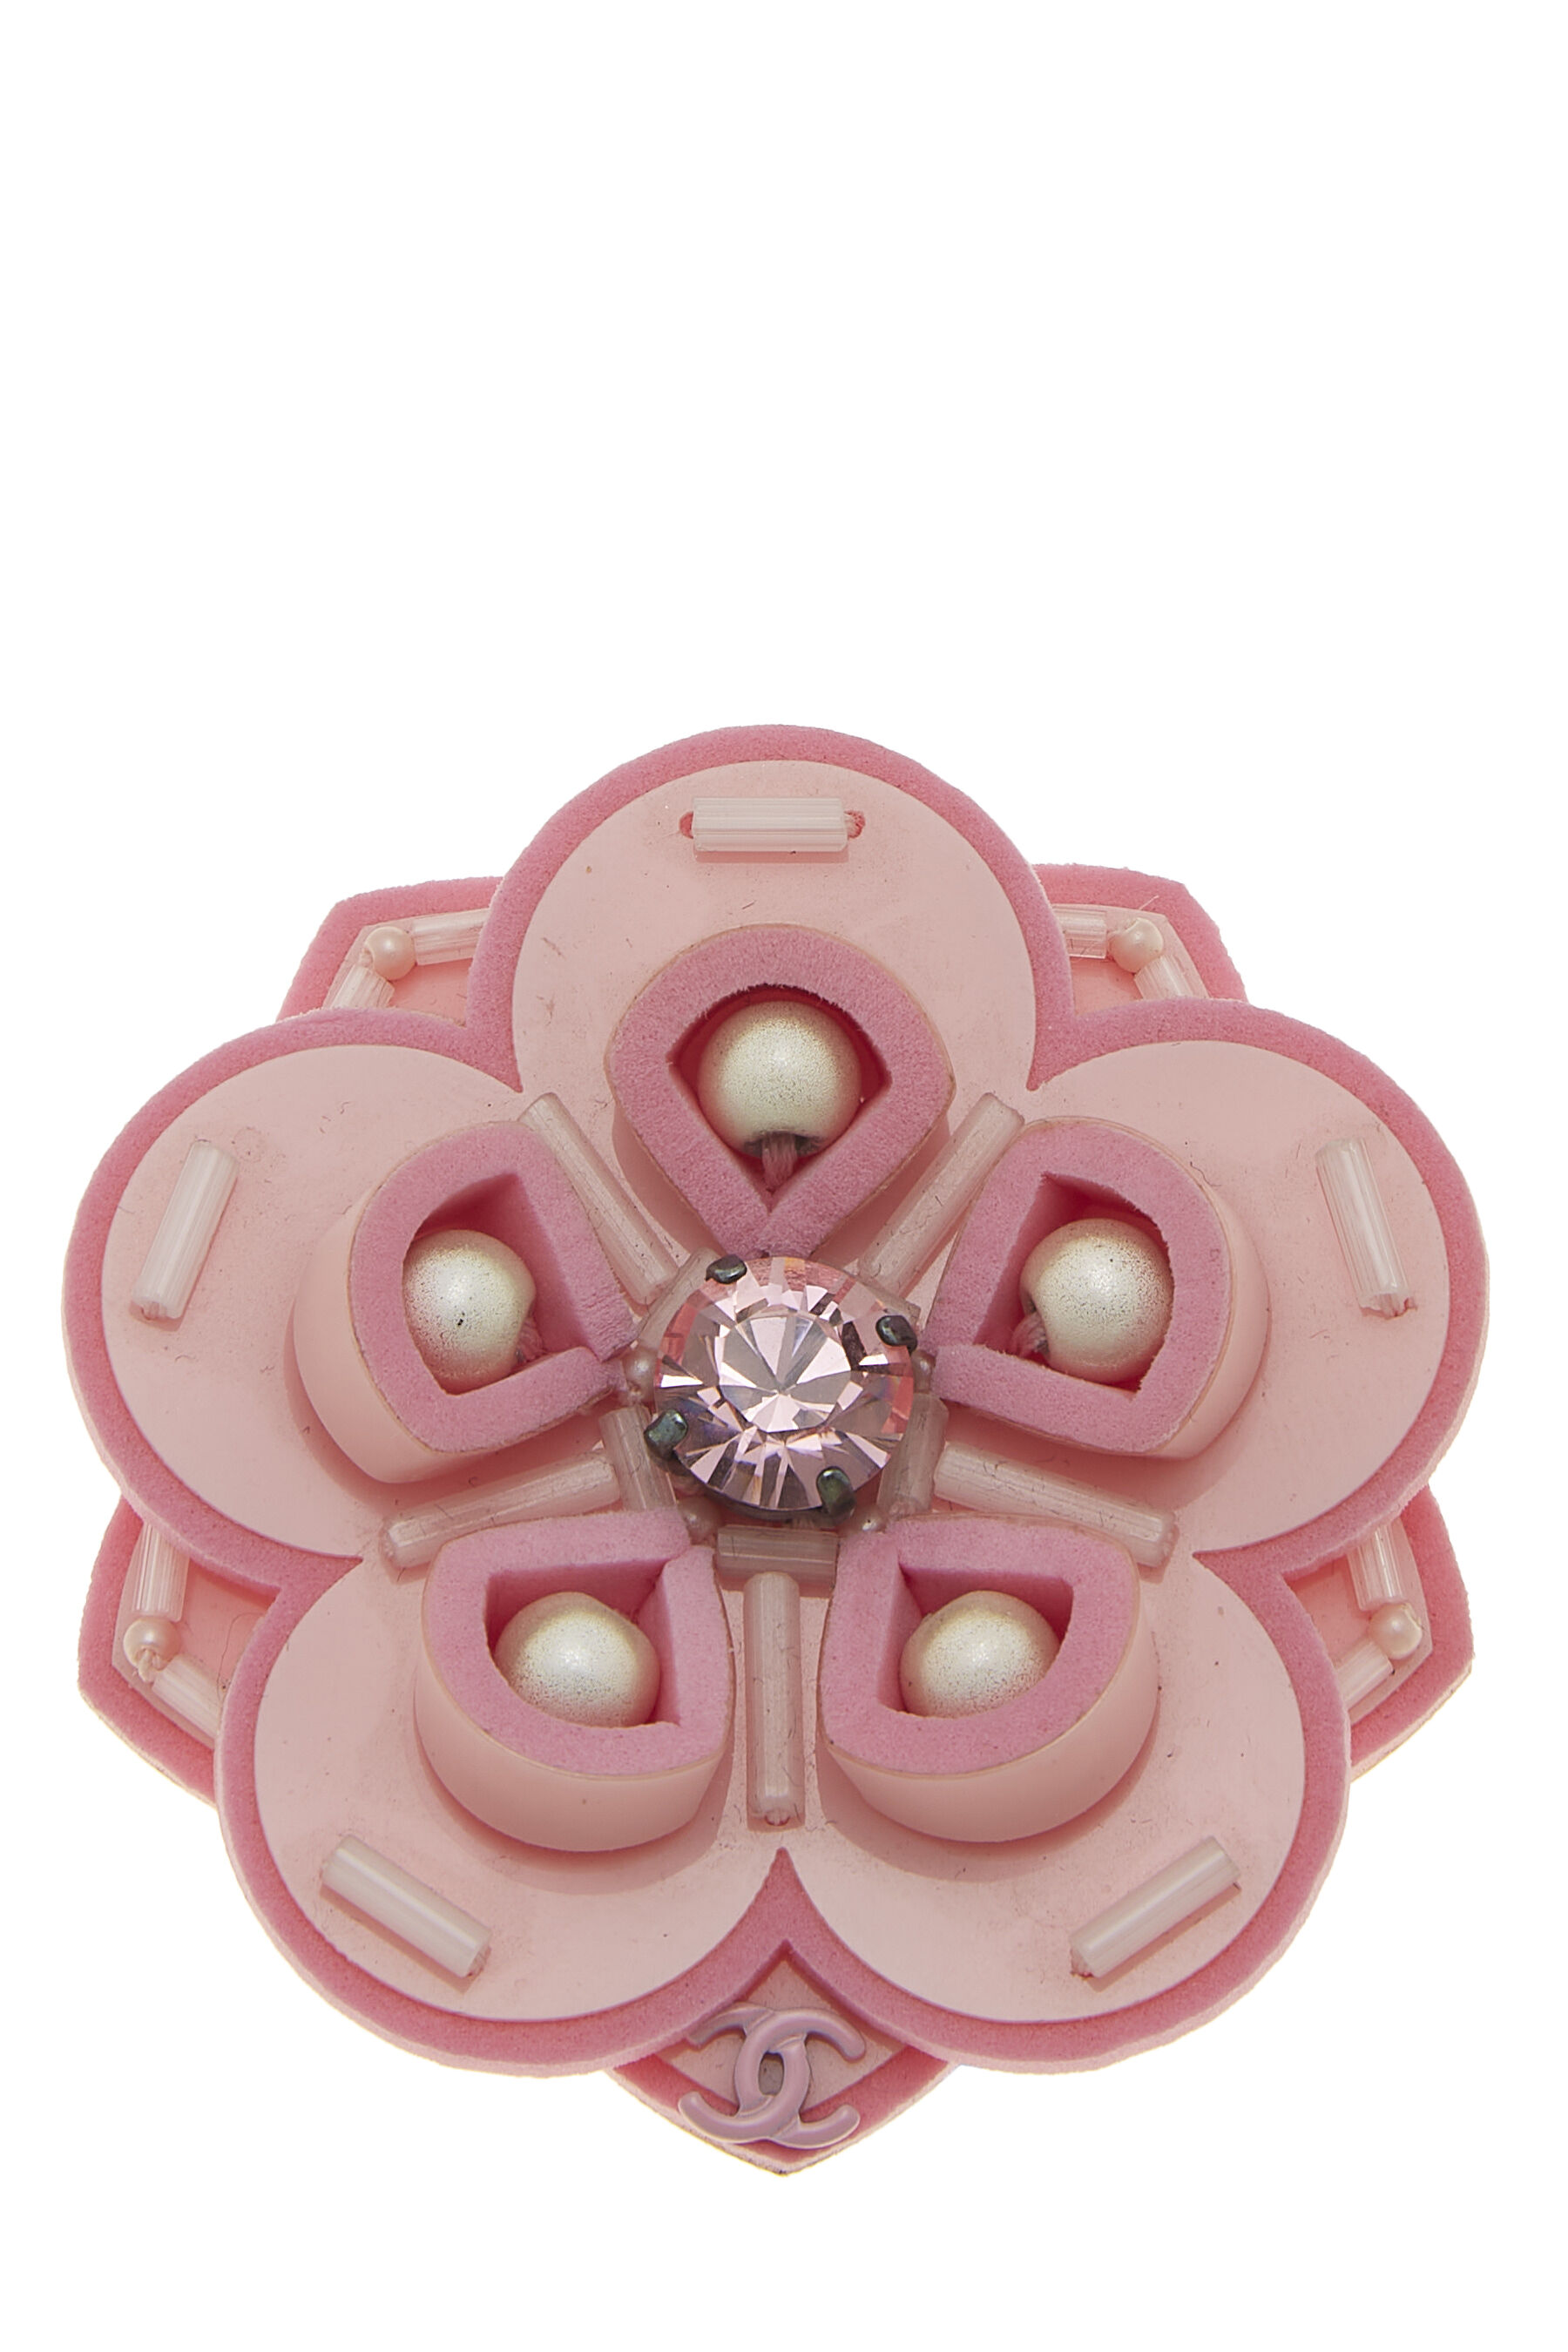 Chanel - Pink Plastic Camellia Brooch